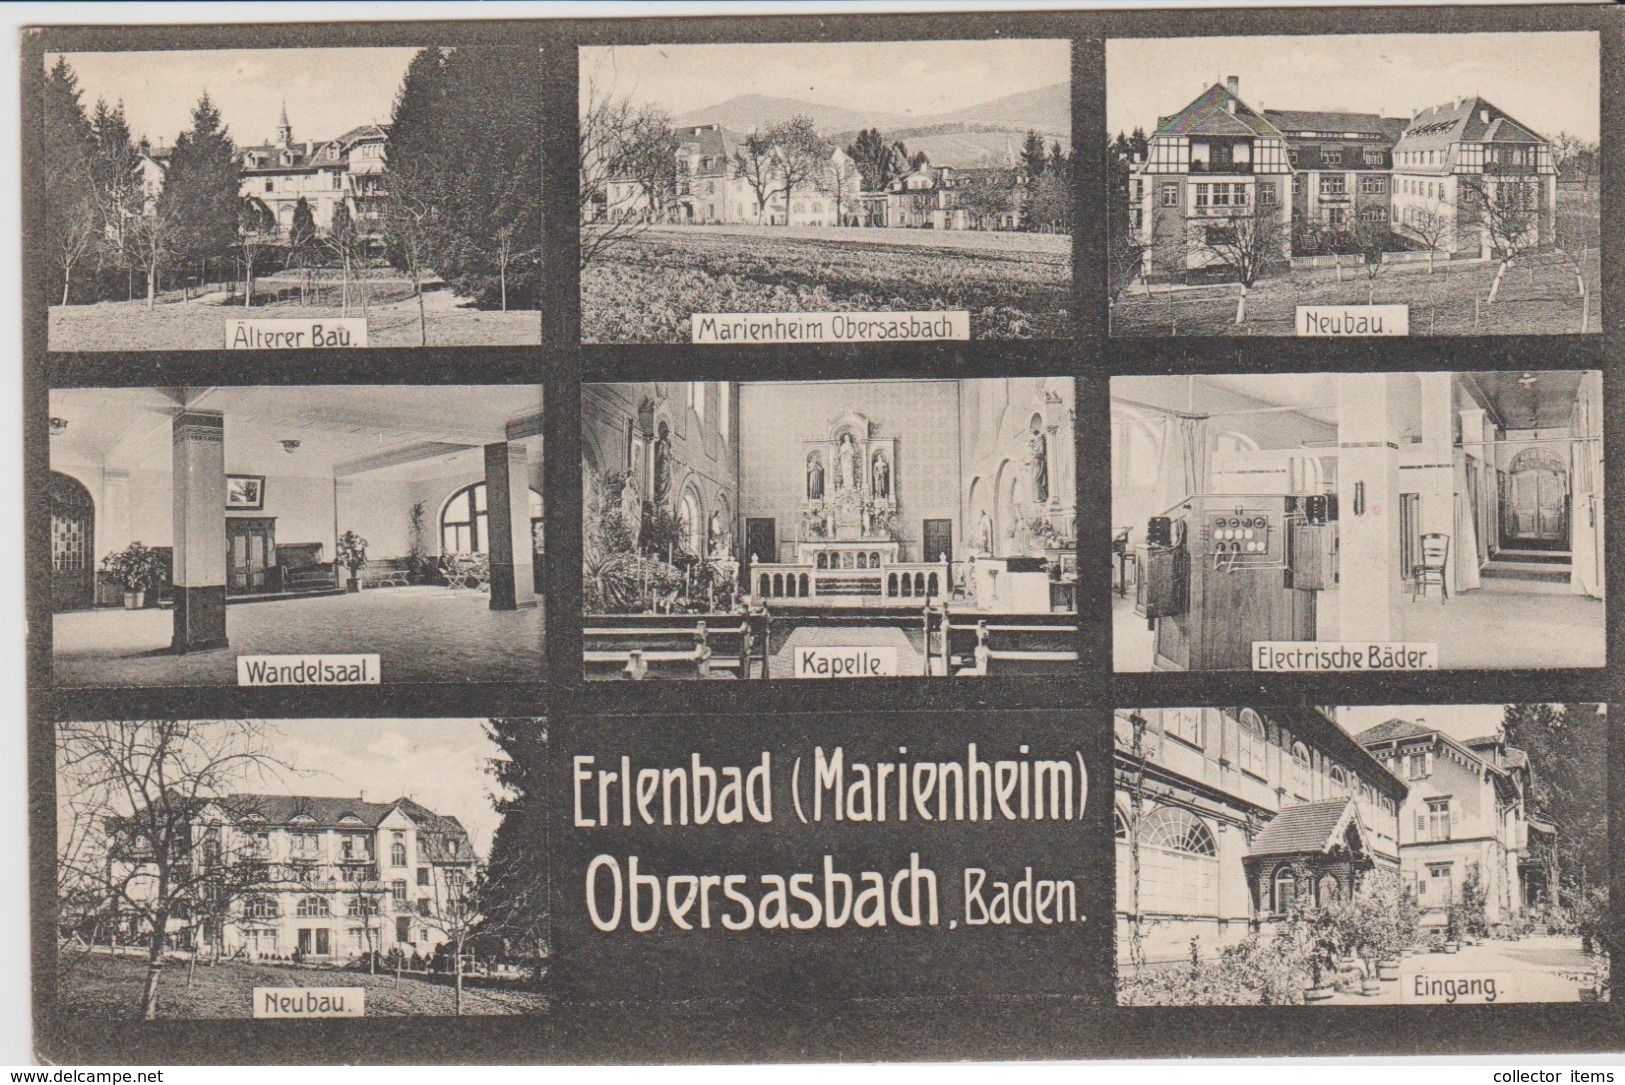 Obersachbach, Erlenbad (Marienheim) - Sasbach